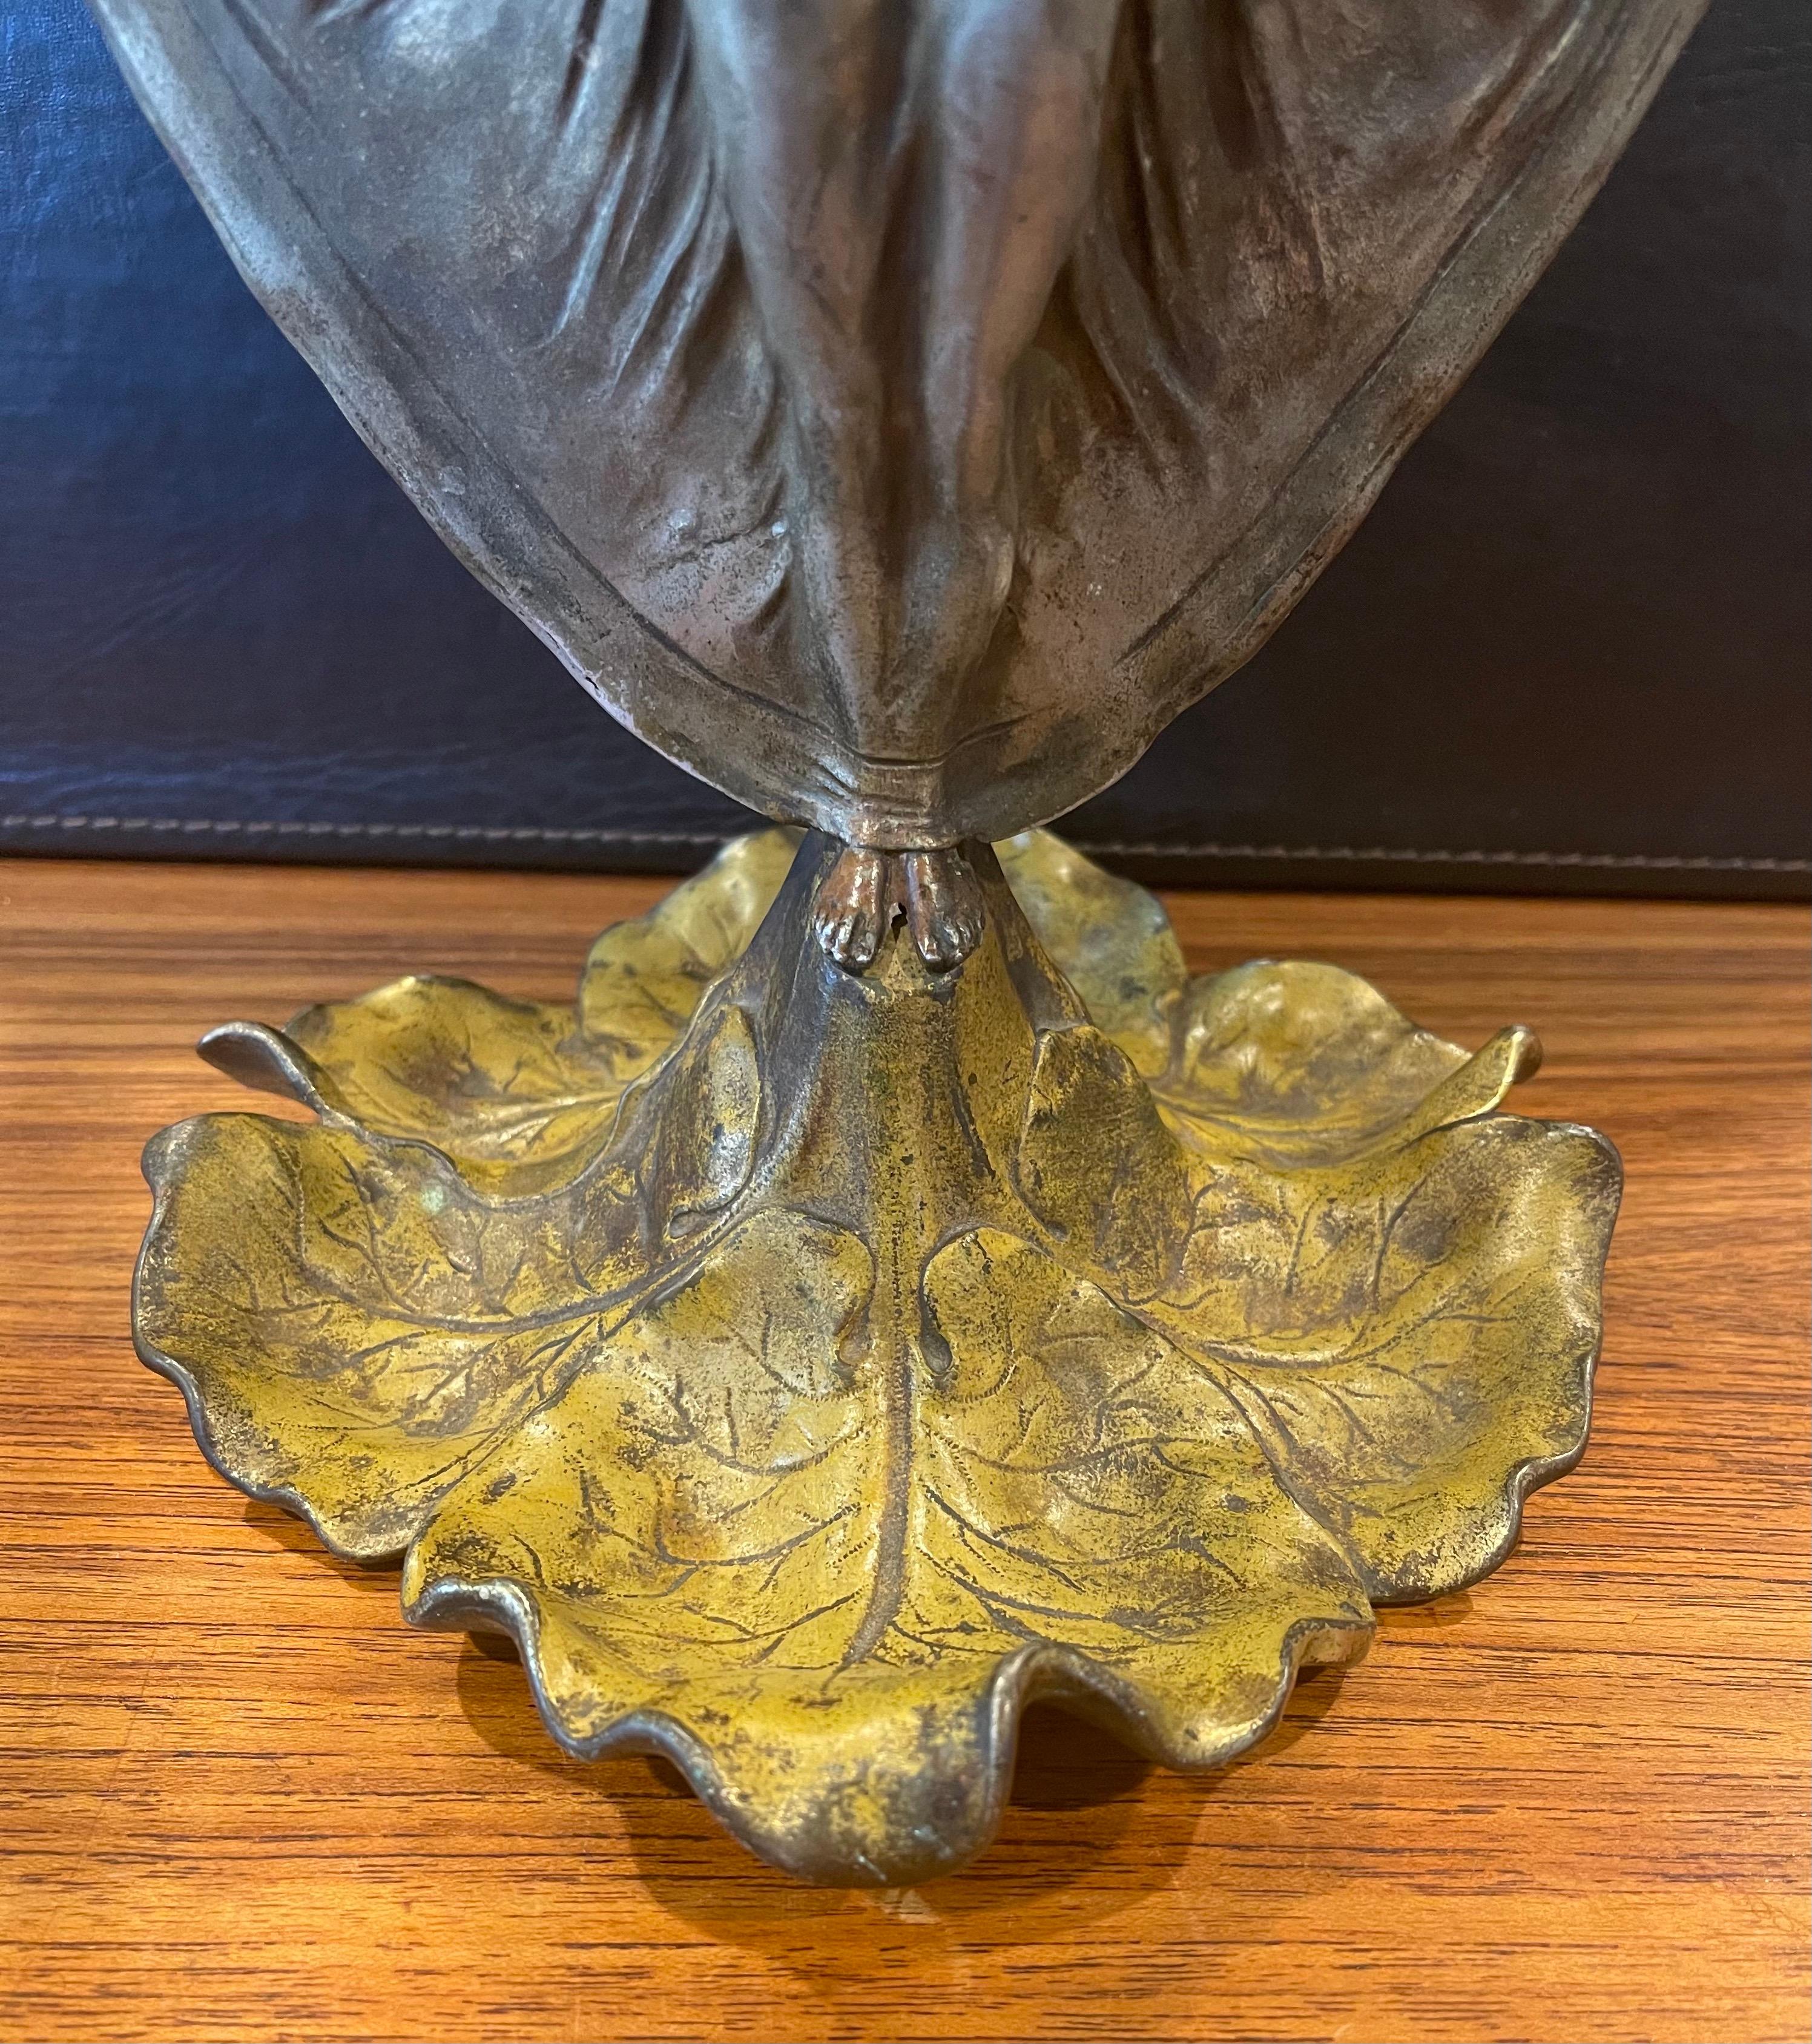 20th Century Art Nouveau Figural Cast Metal Vase with Glass Insert